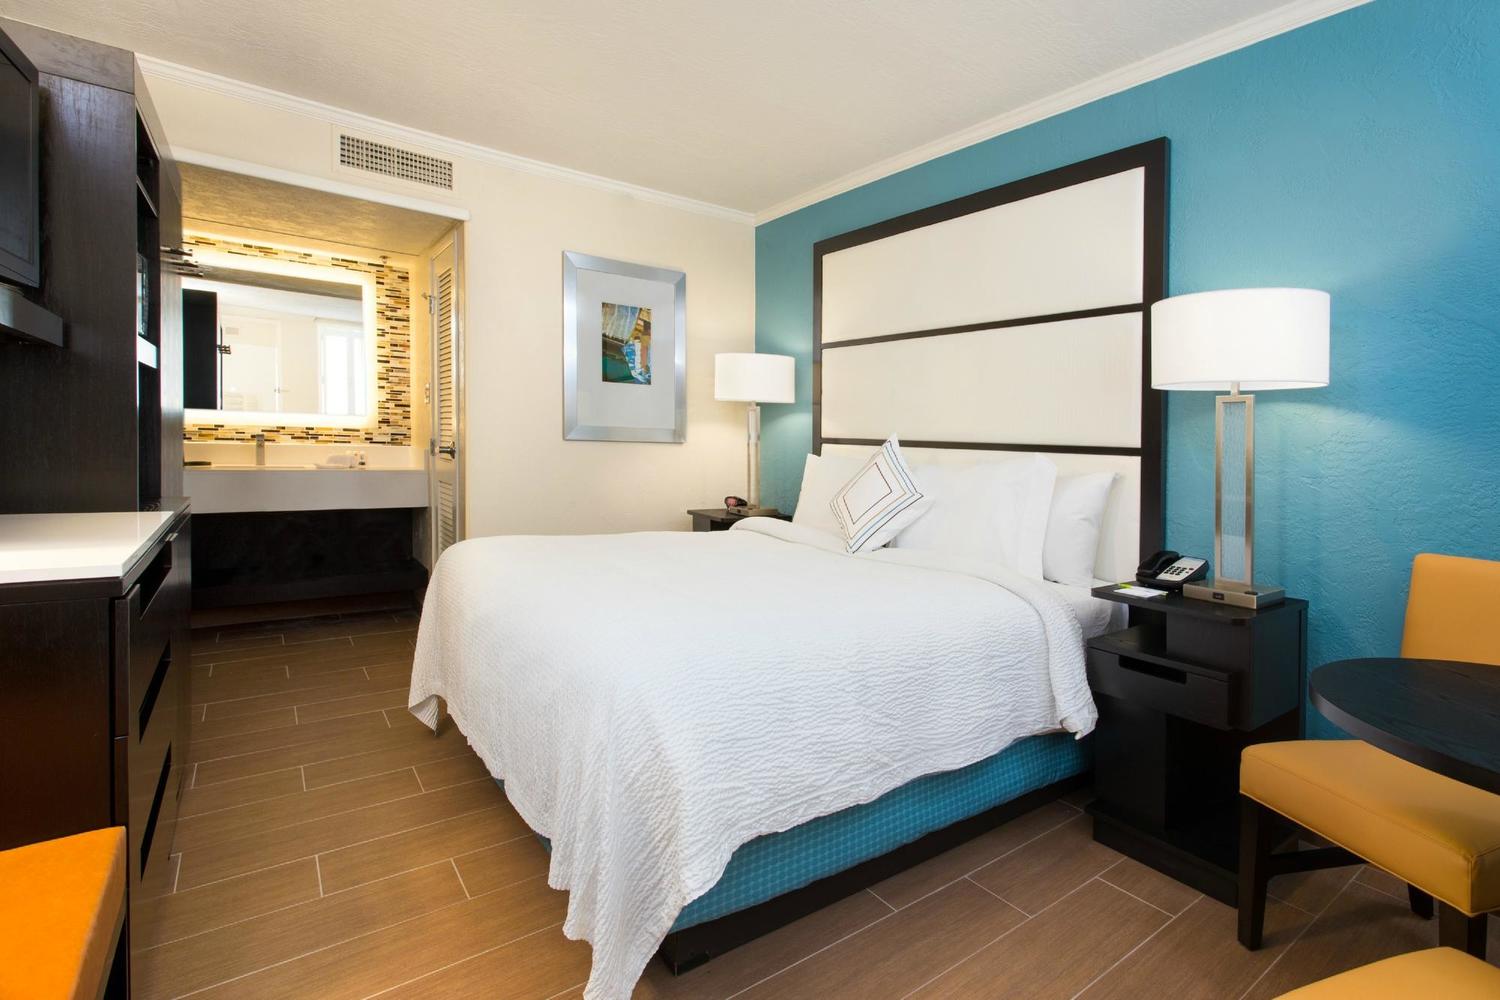 Fairfield Inn Suites Key West  Key West  Jobs Hospitality Online